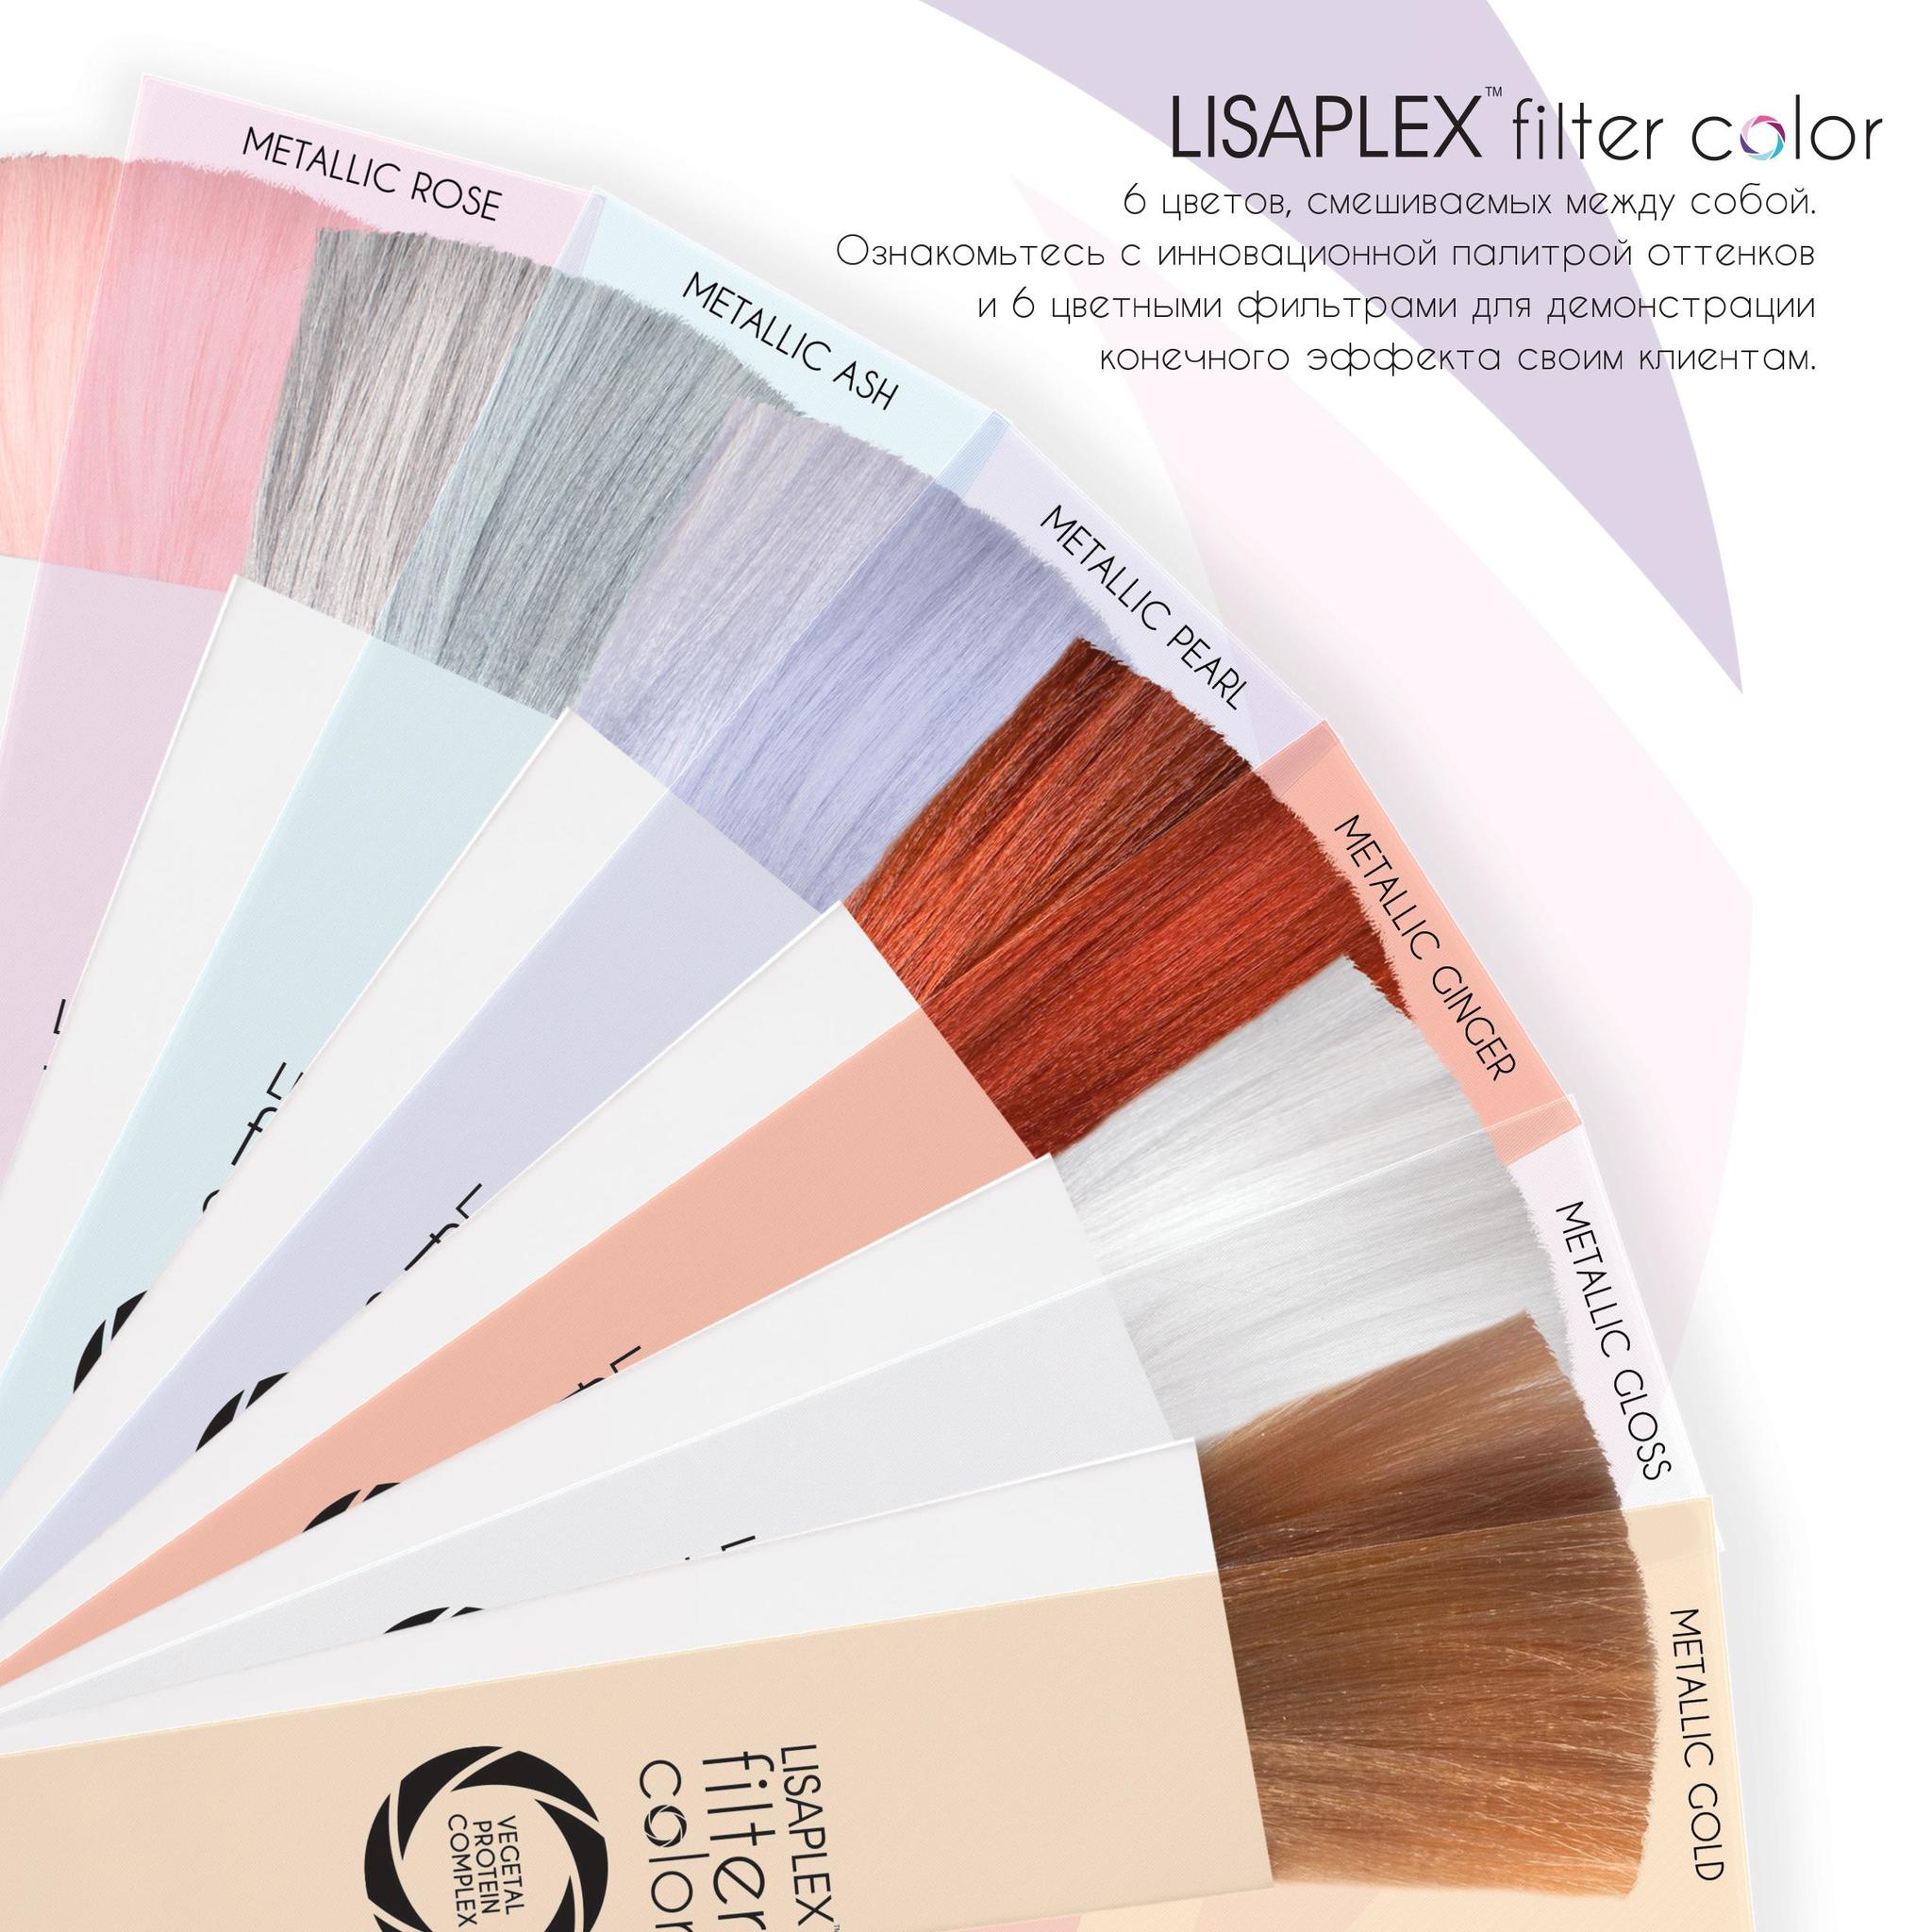 Lisaplex Filter Color палитра цветов